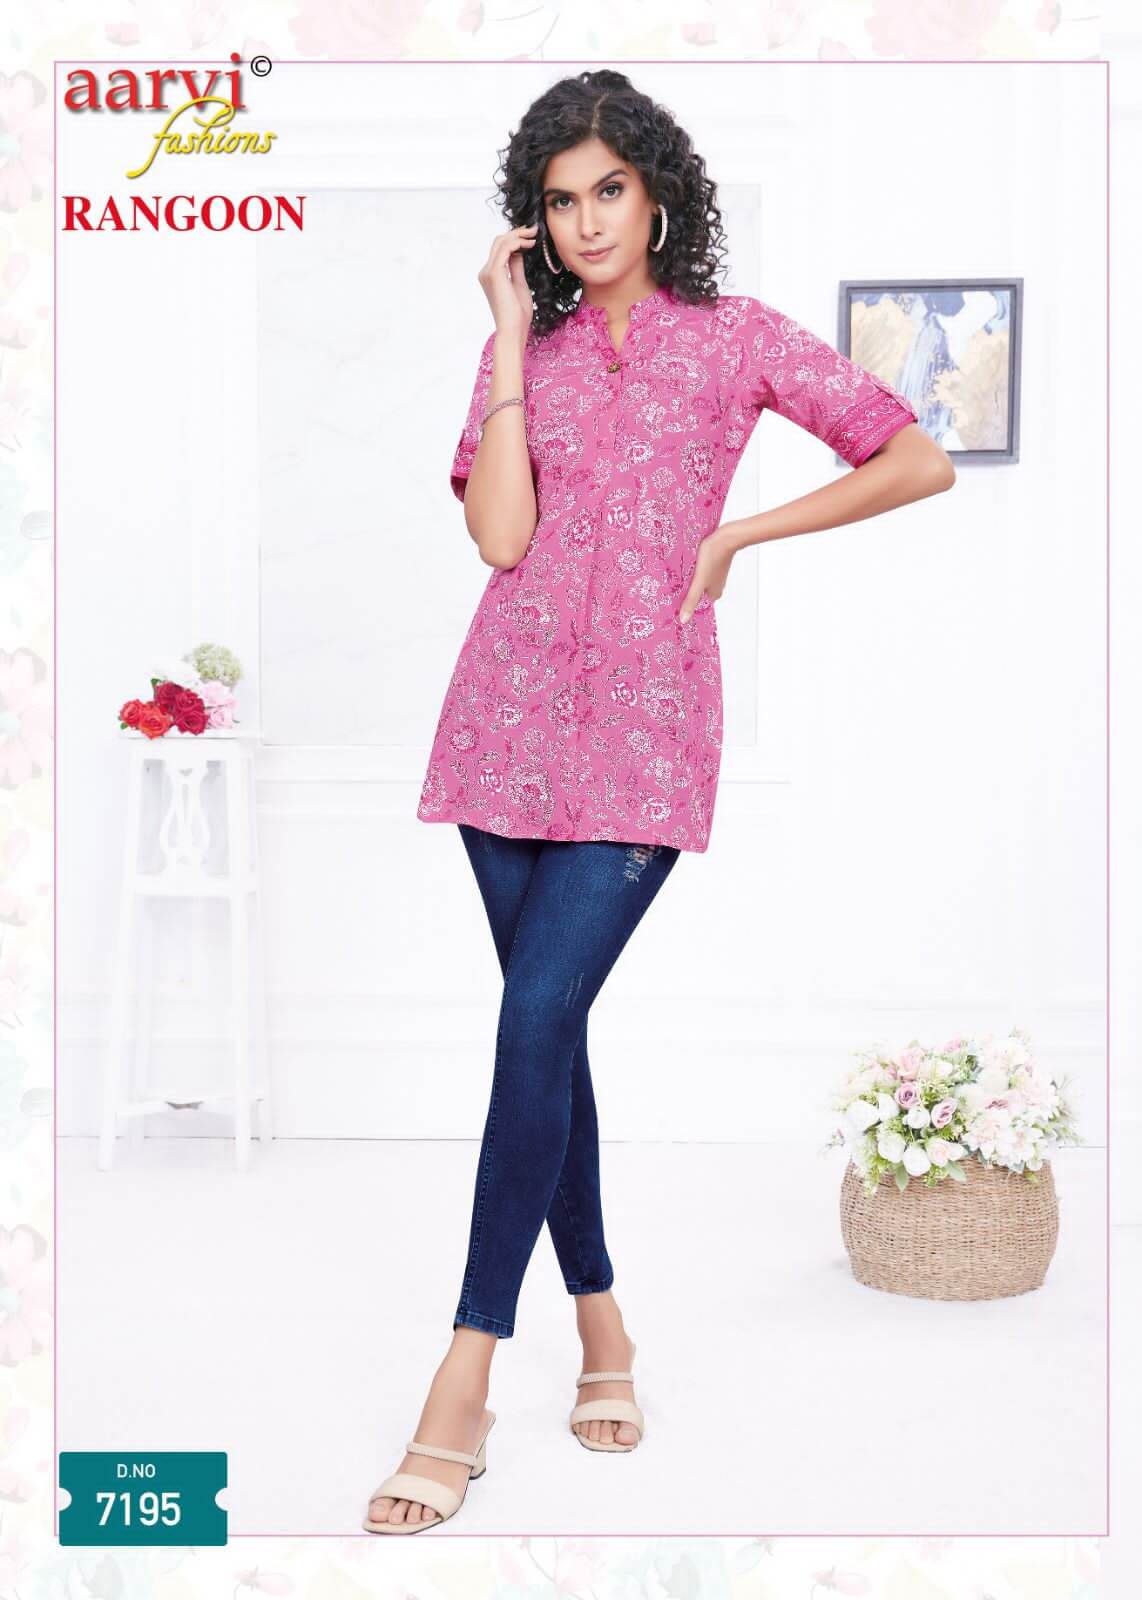 Aarvi Fashions Rangoon Ladies Short Tops Catalog collection 16